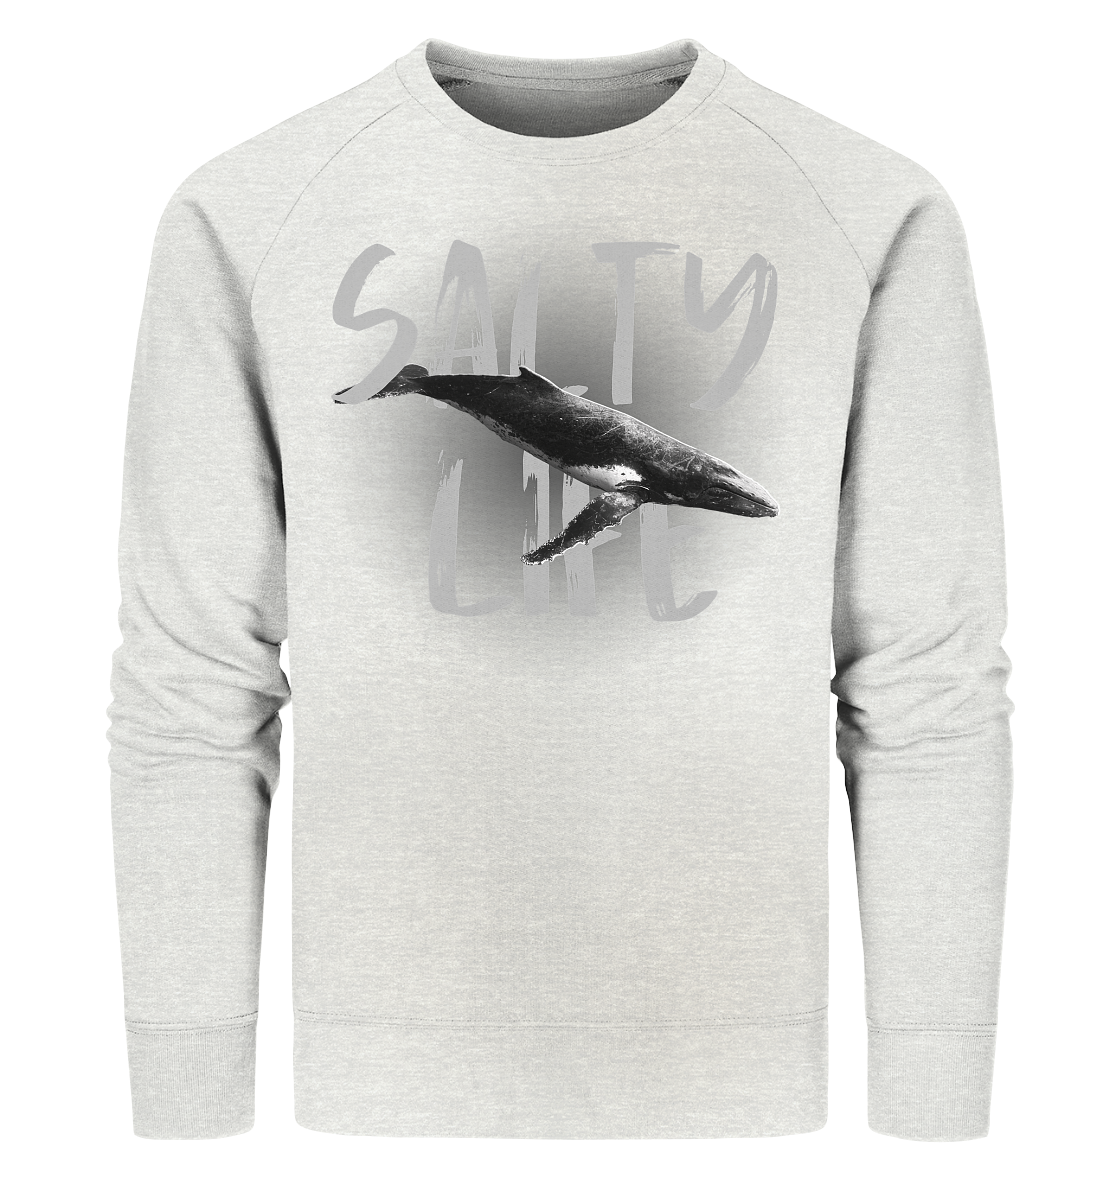 Salty Life "Humpback Whales" - Organic Sweatshirt